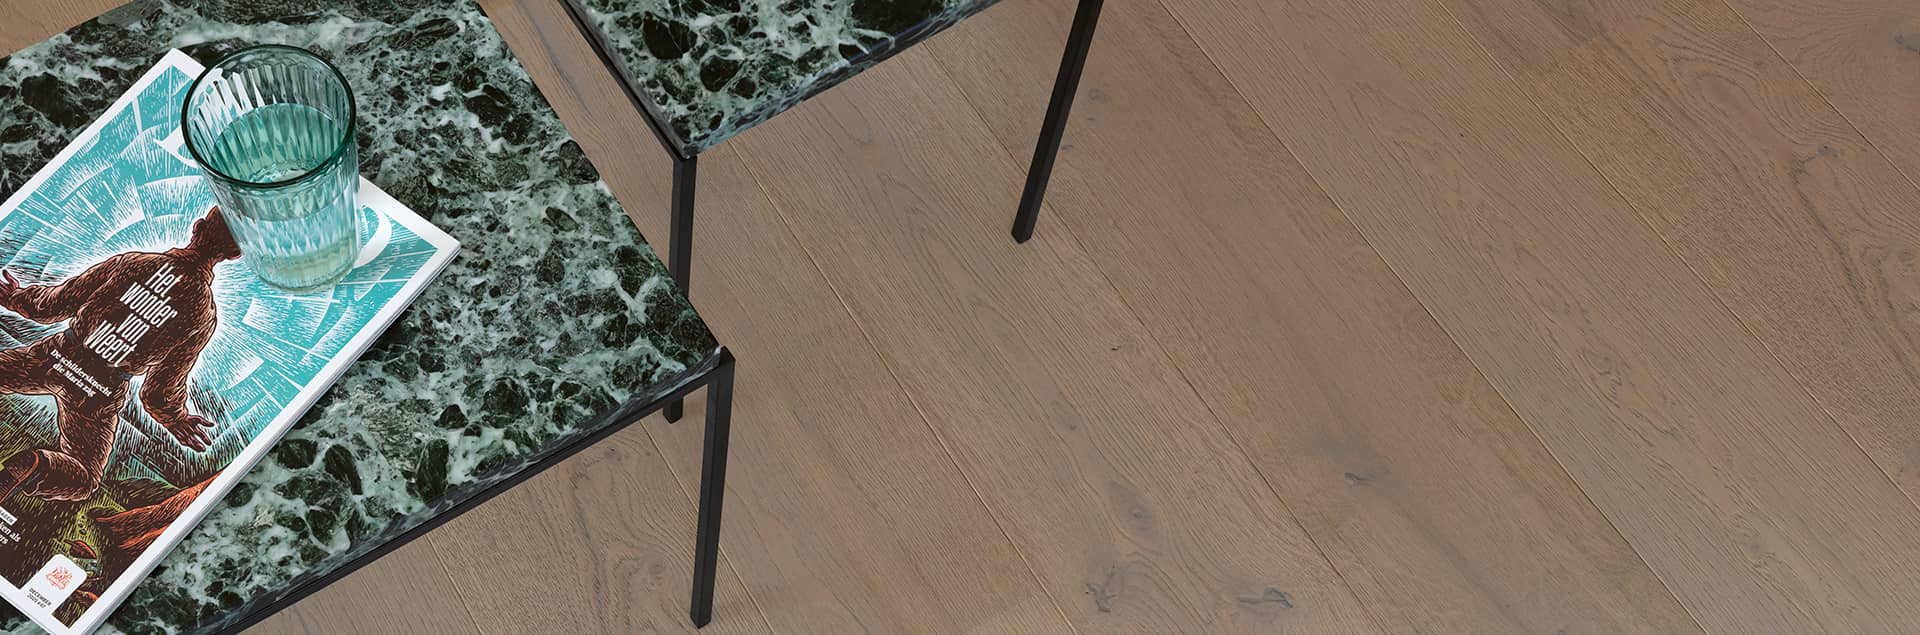 Brown Quick-Step engineered wood floor